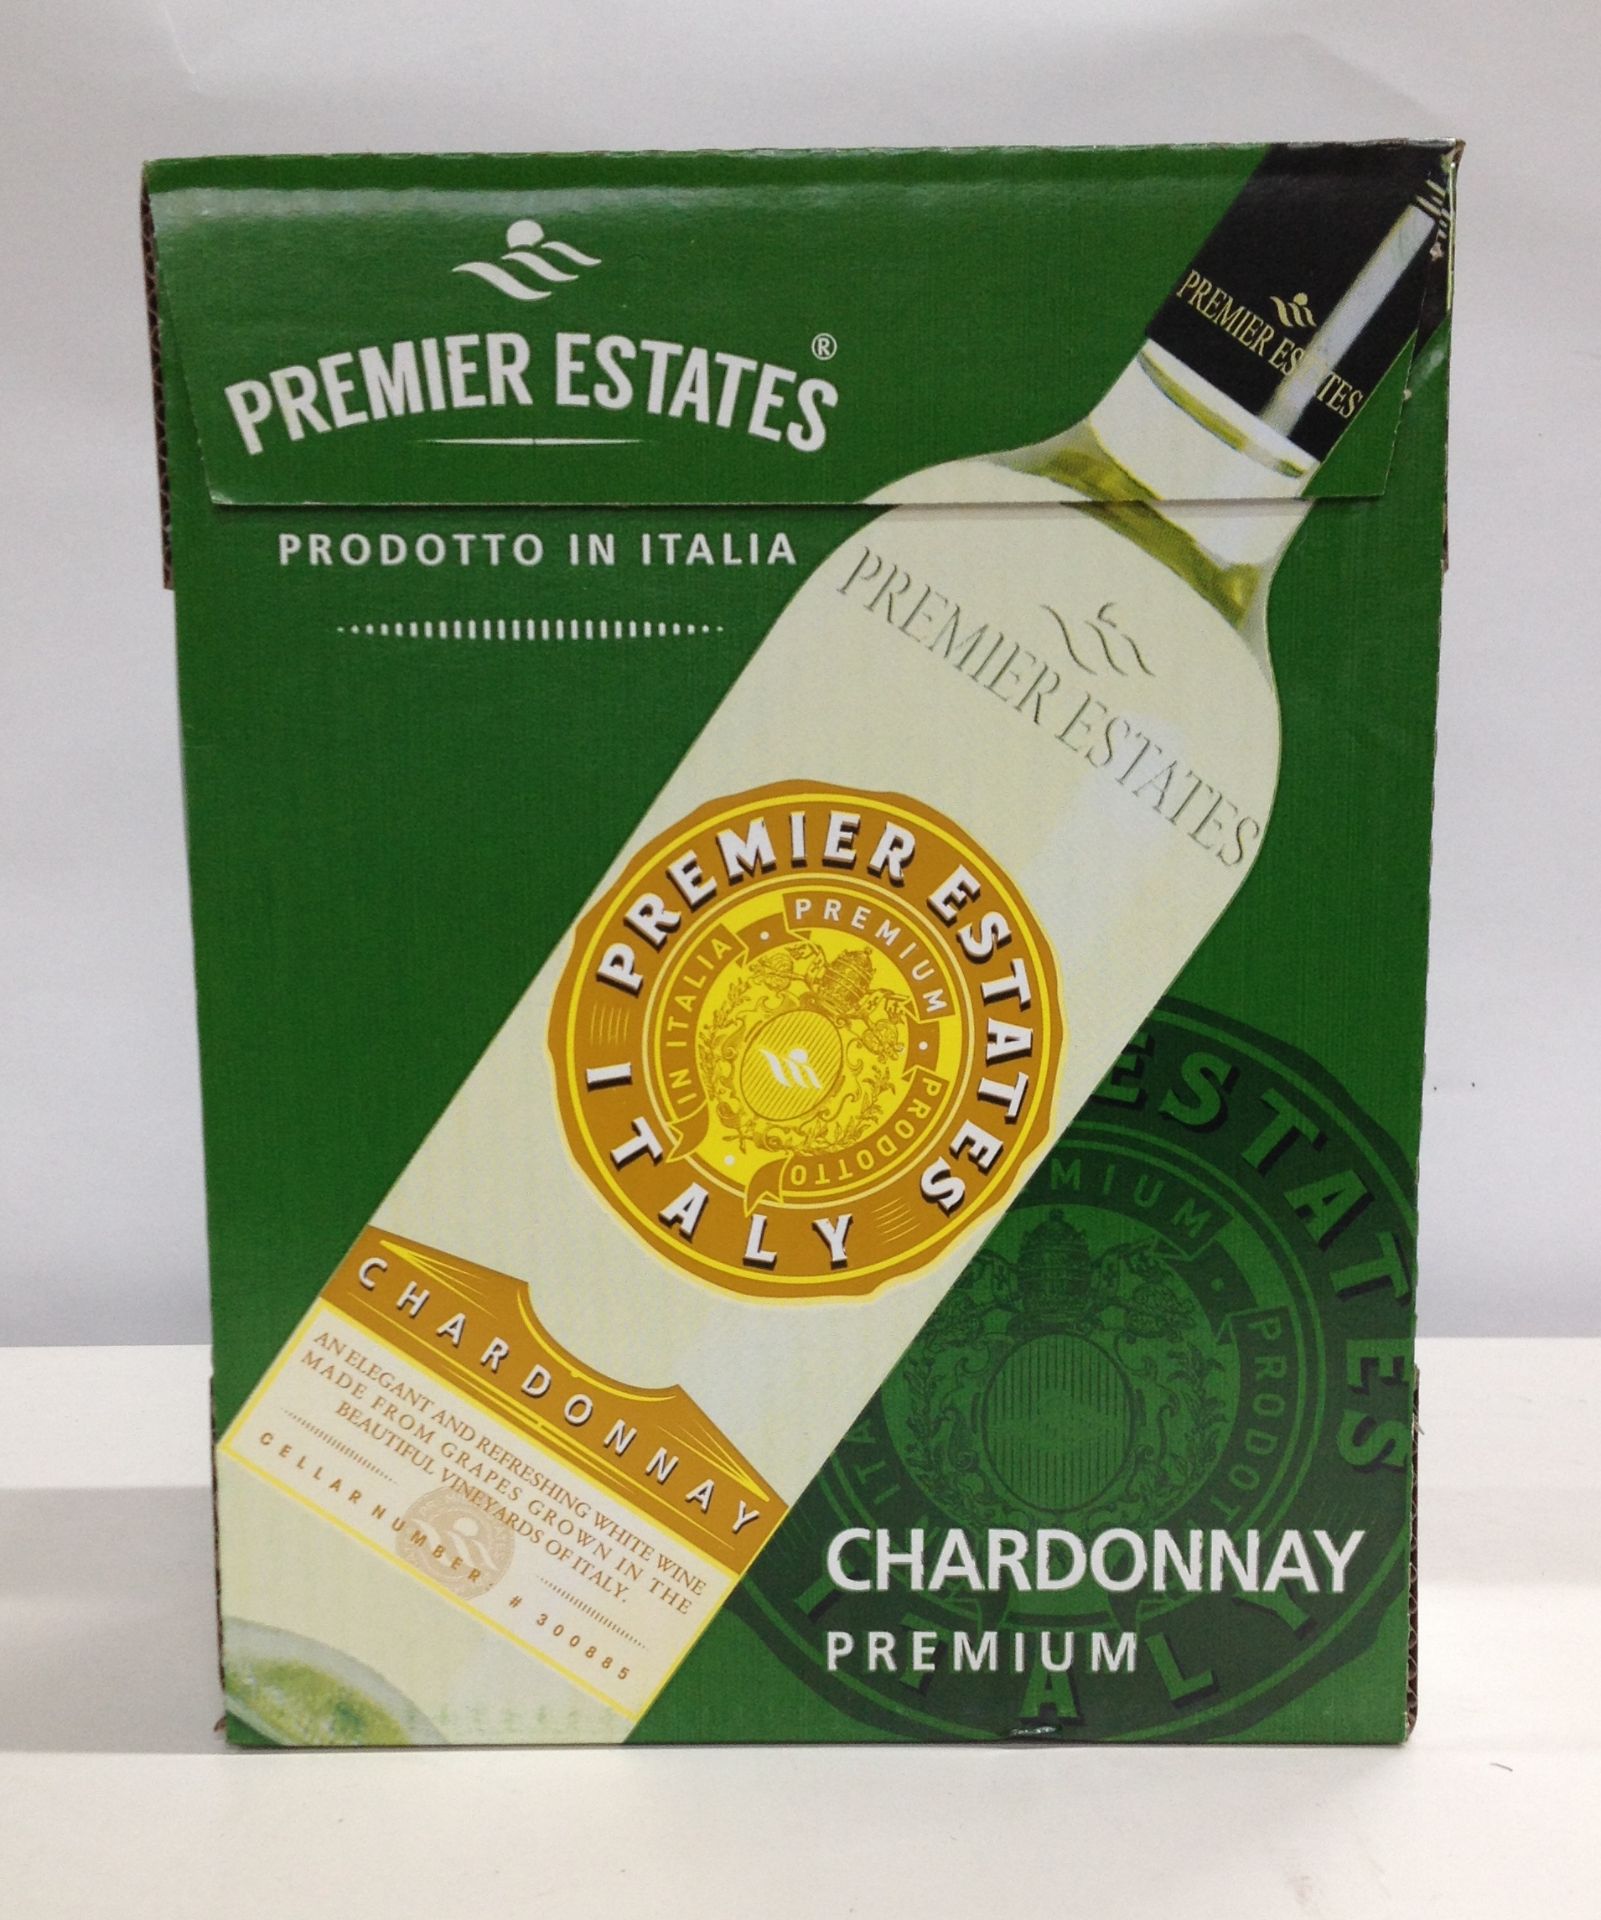 24 x 75cl Bottles Premier Estates Chardonnay Premium White Wine - Image 3 of 4